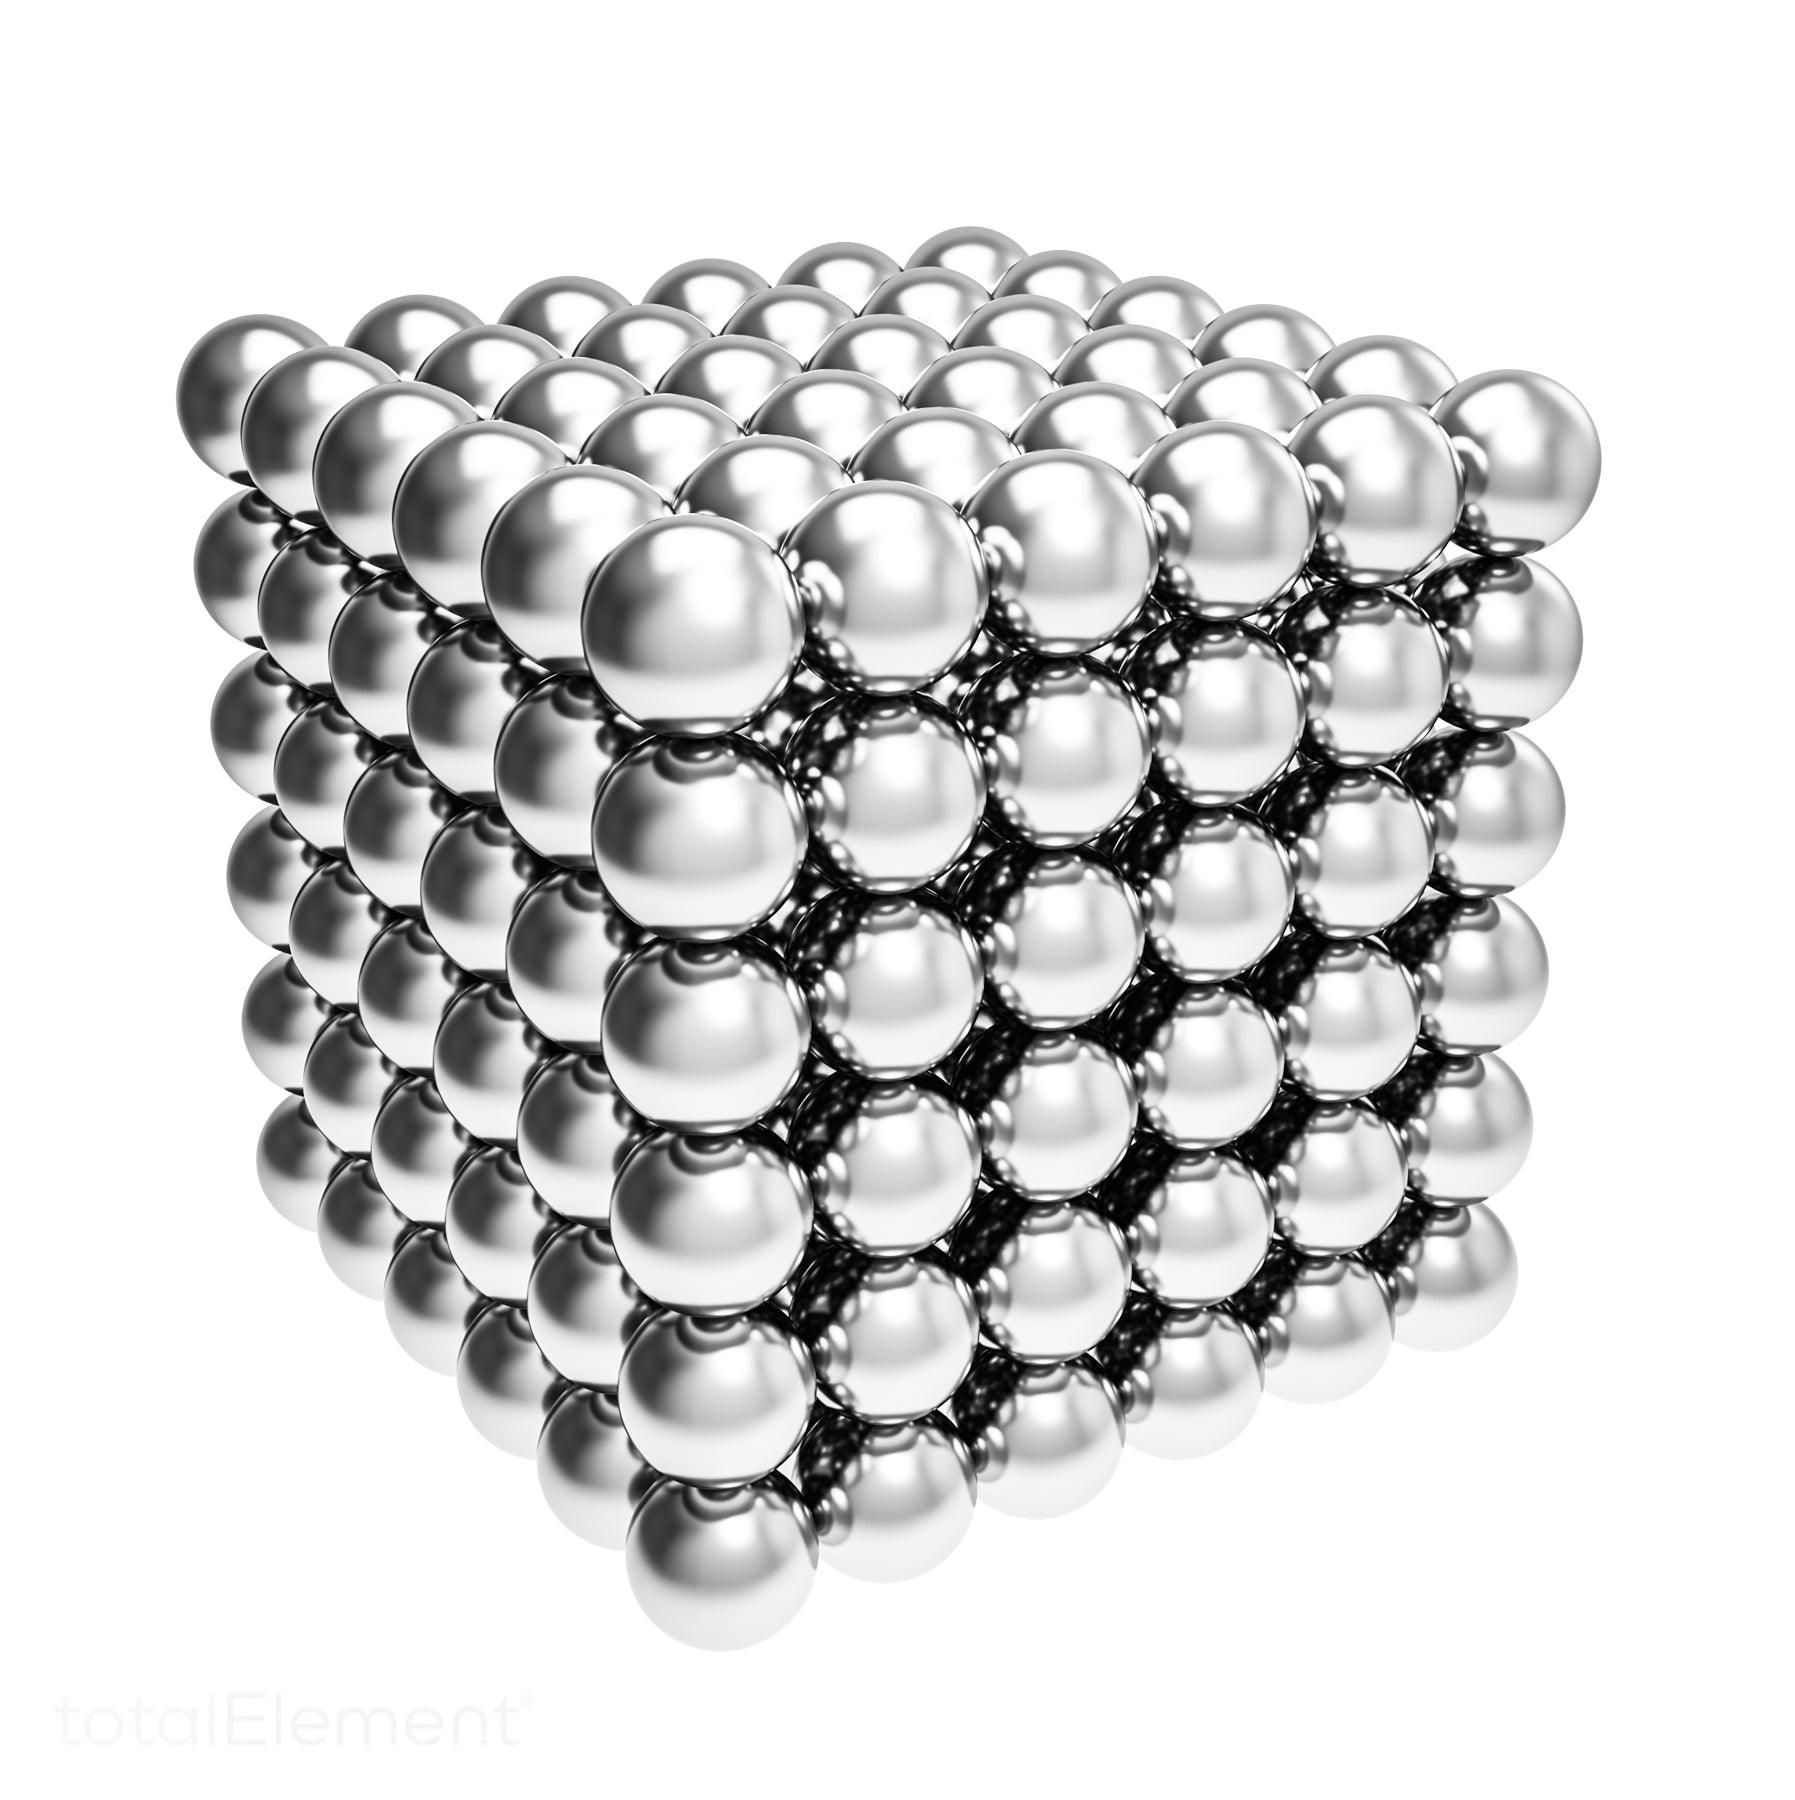 5mm Neodymium Rare Earth Sphere/Ball Magnets N35 (216 Pack)